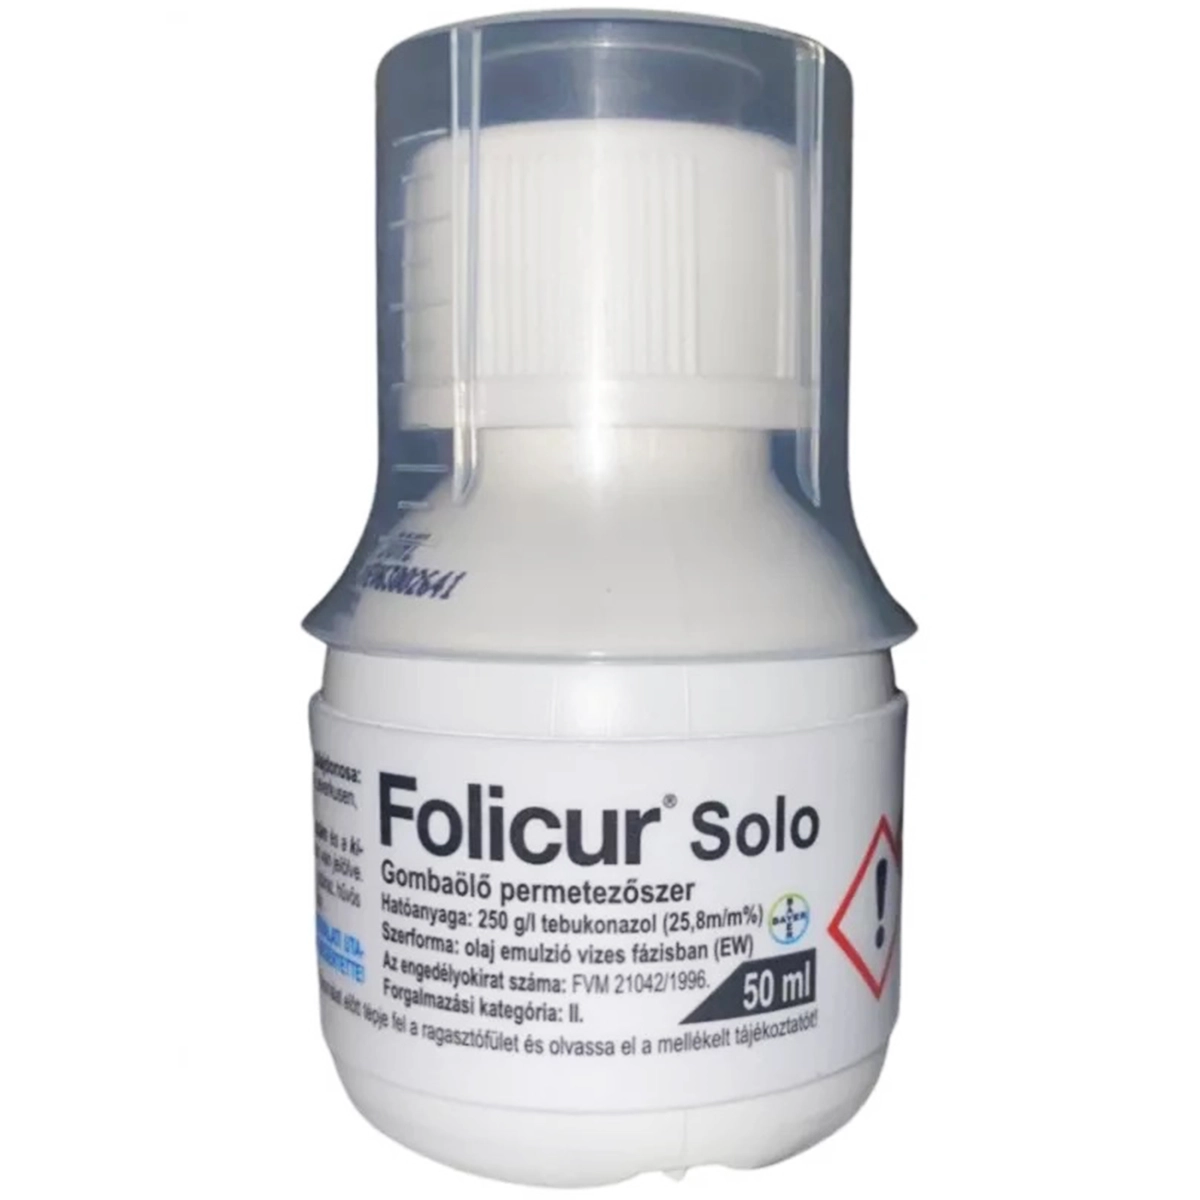 Folicur Solo gombaölő permetezőszer 50 ml